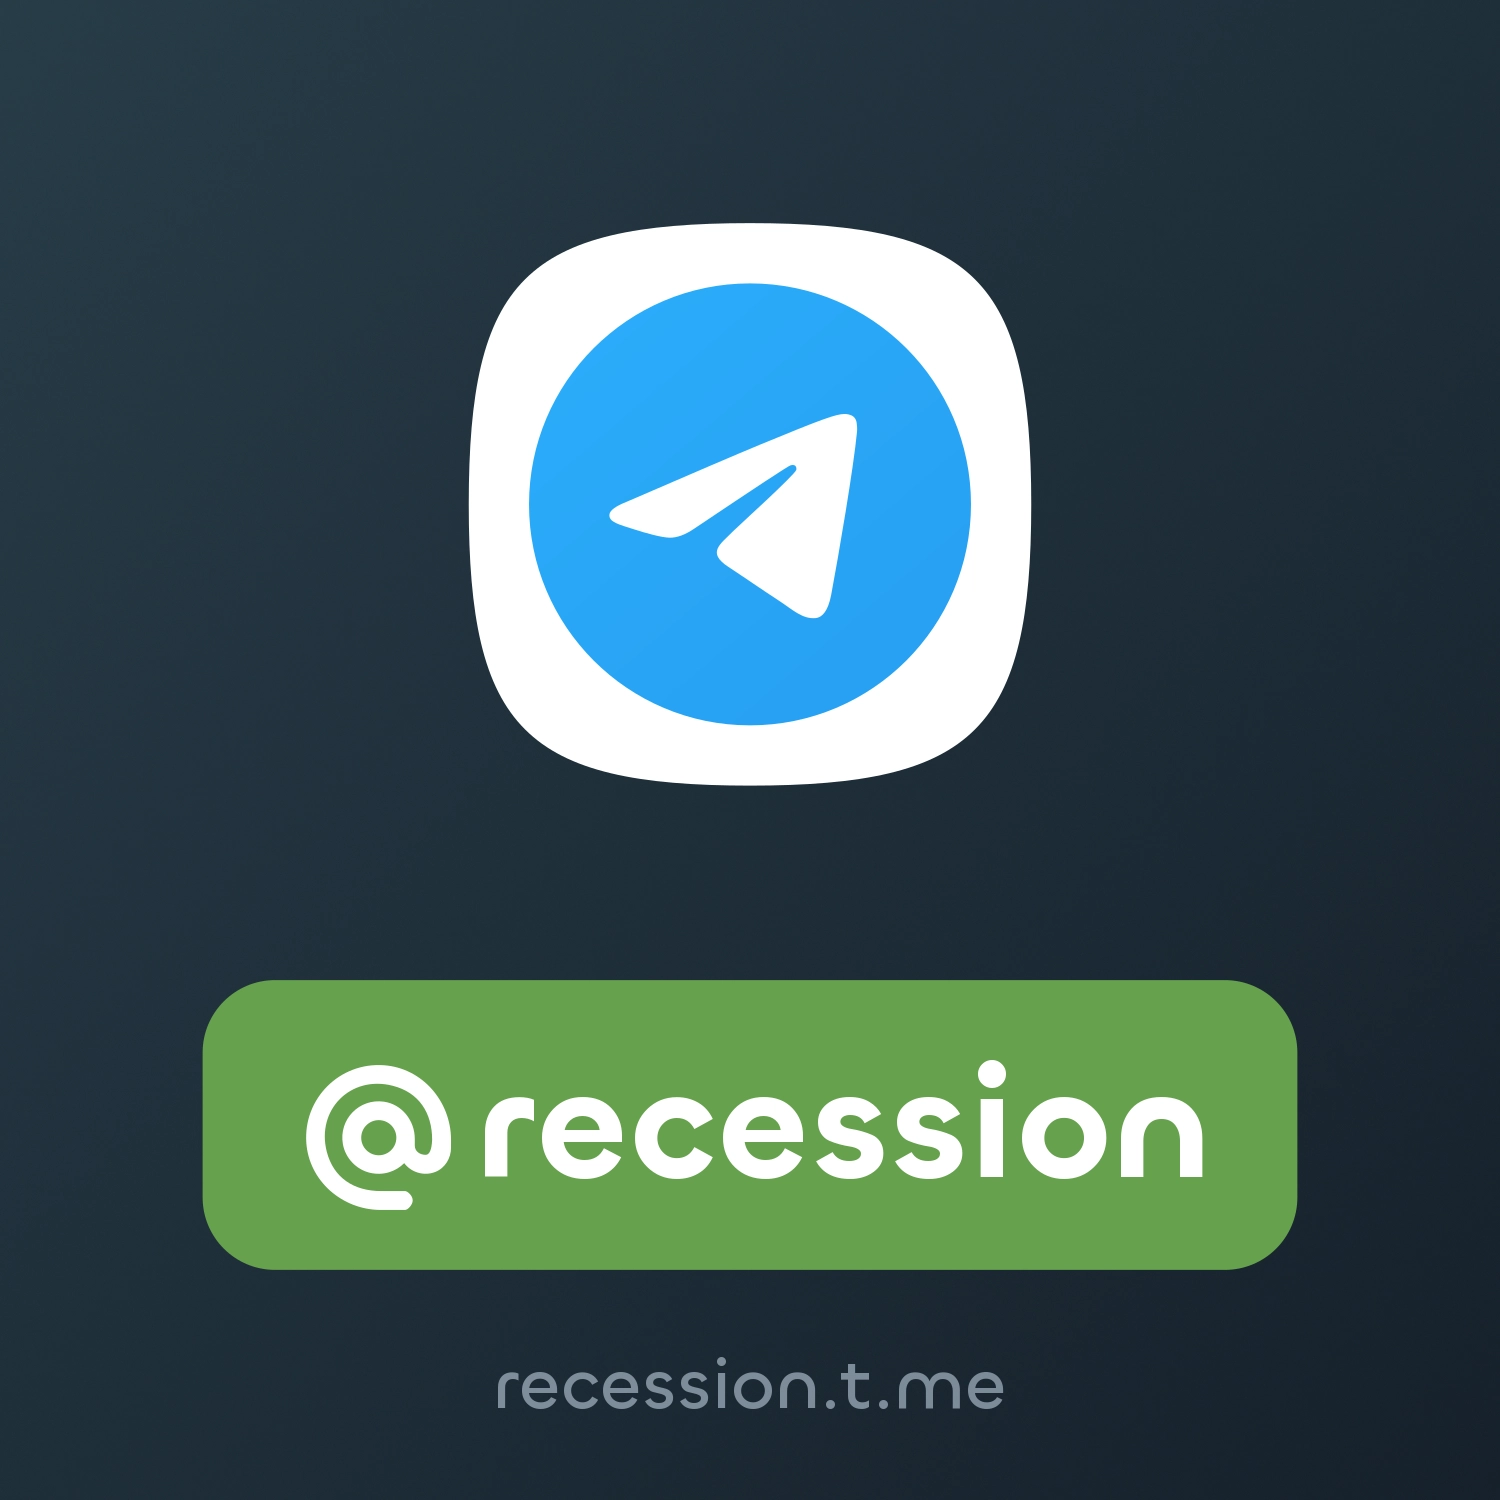 @recession